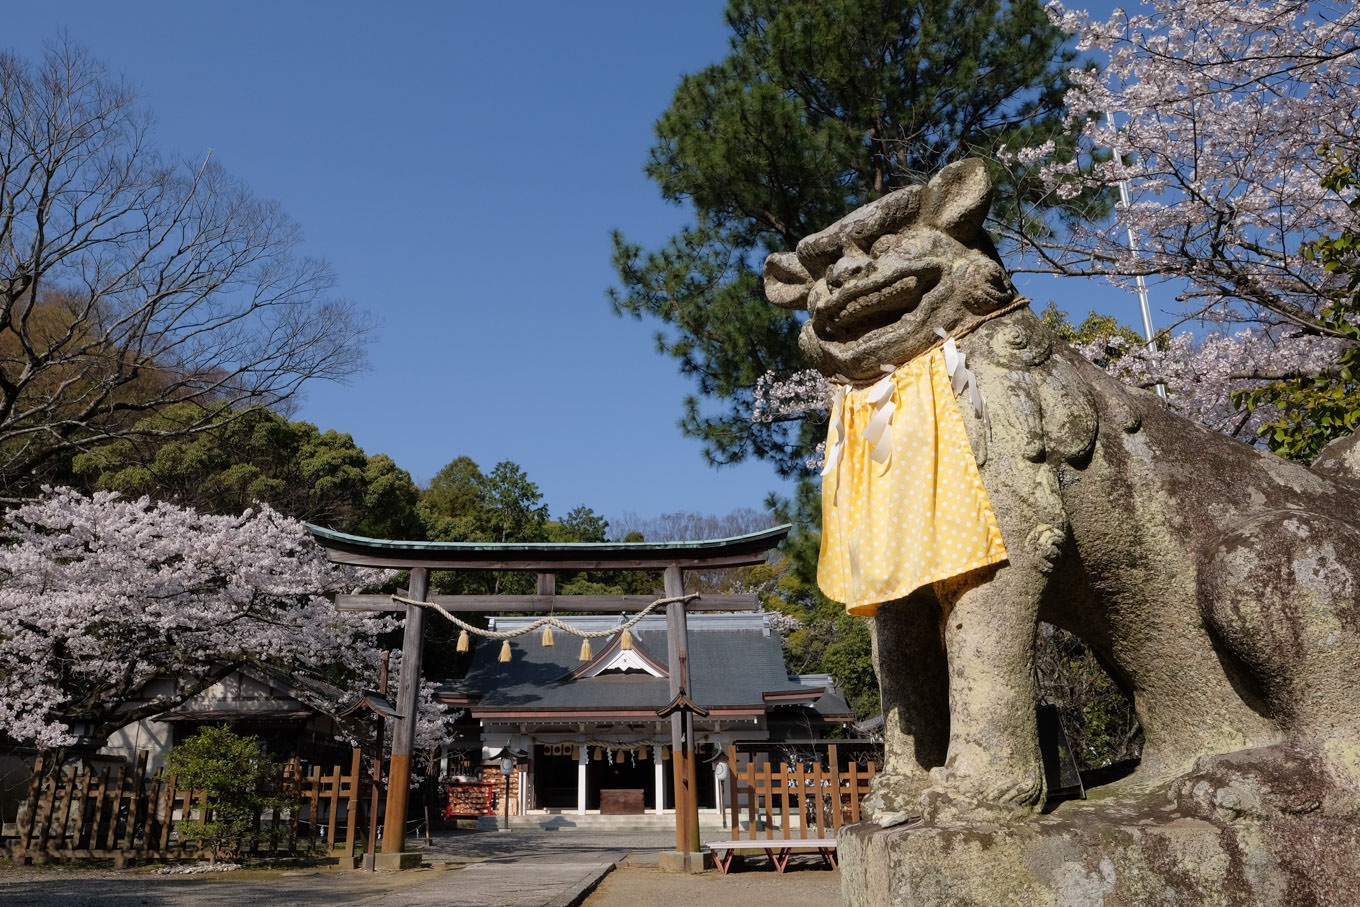 忌部神社の狛犬と拝殿。